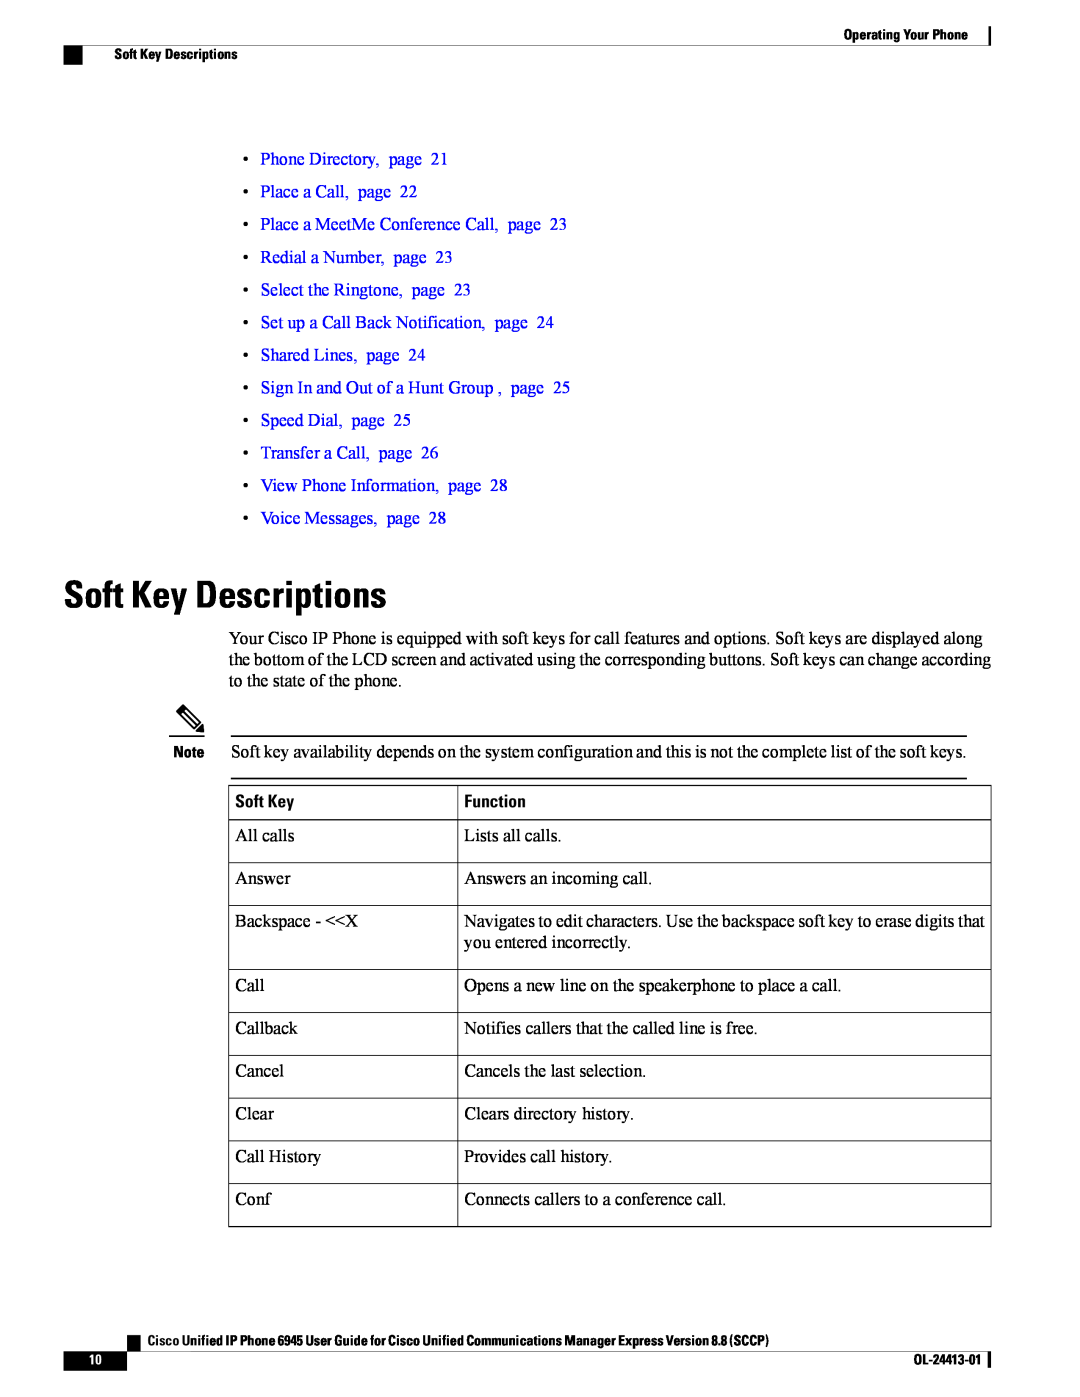 Cisco Systems 6945 manual Soft Key Descriptions, Function 